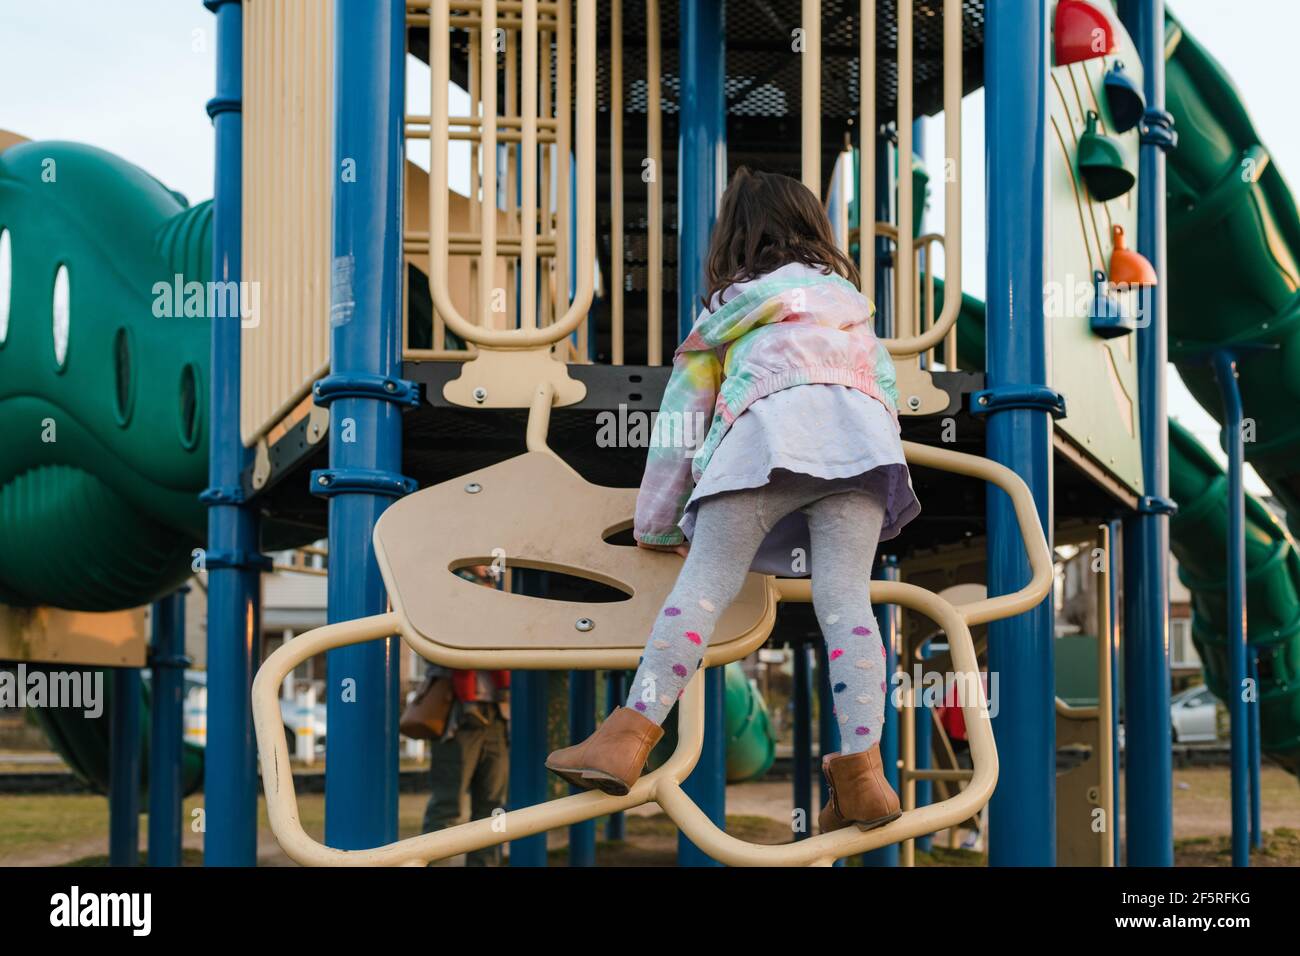 Girl climbing playground equipment wearing dress and tights Stock Photo